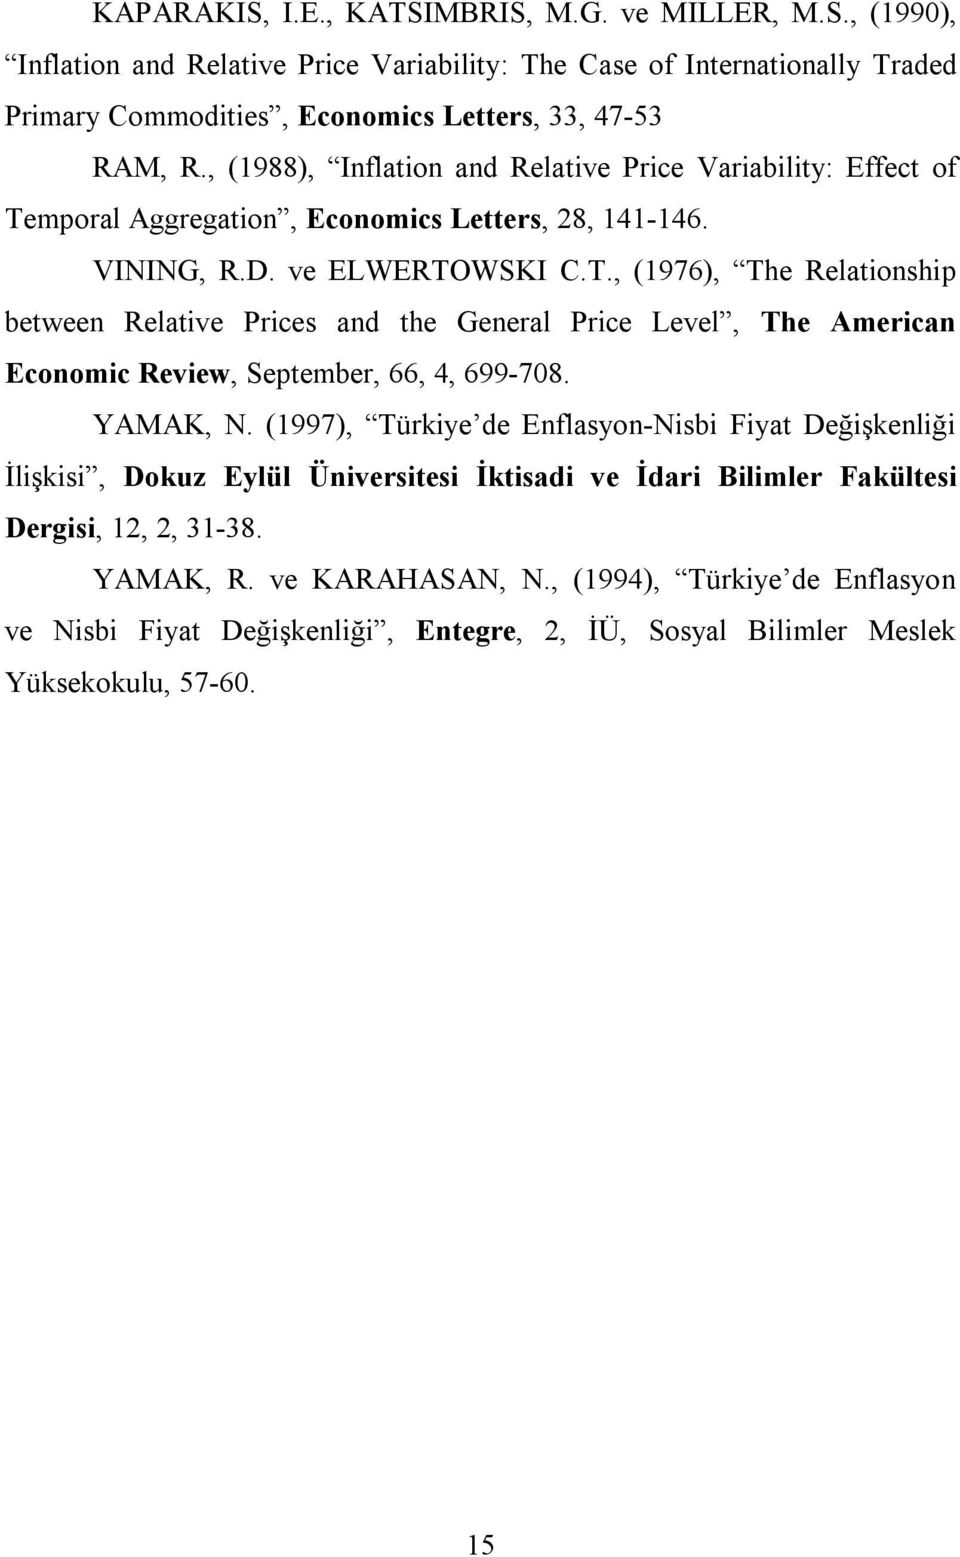 mporal Aggregation, Economics Letters, 28, 141-146. VINING, R.D. ve ELWERTO